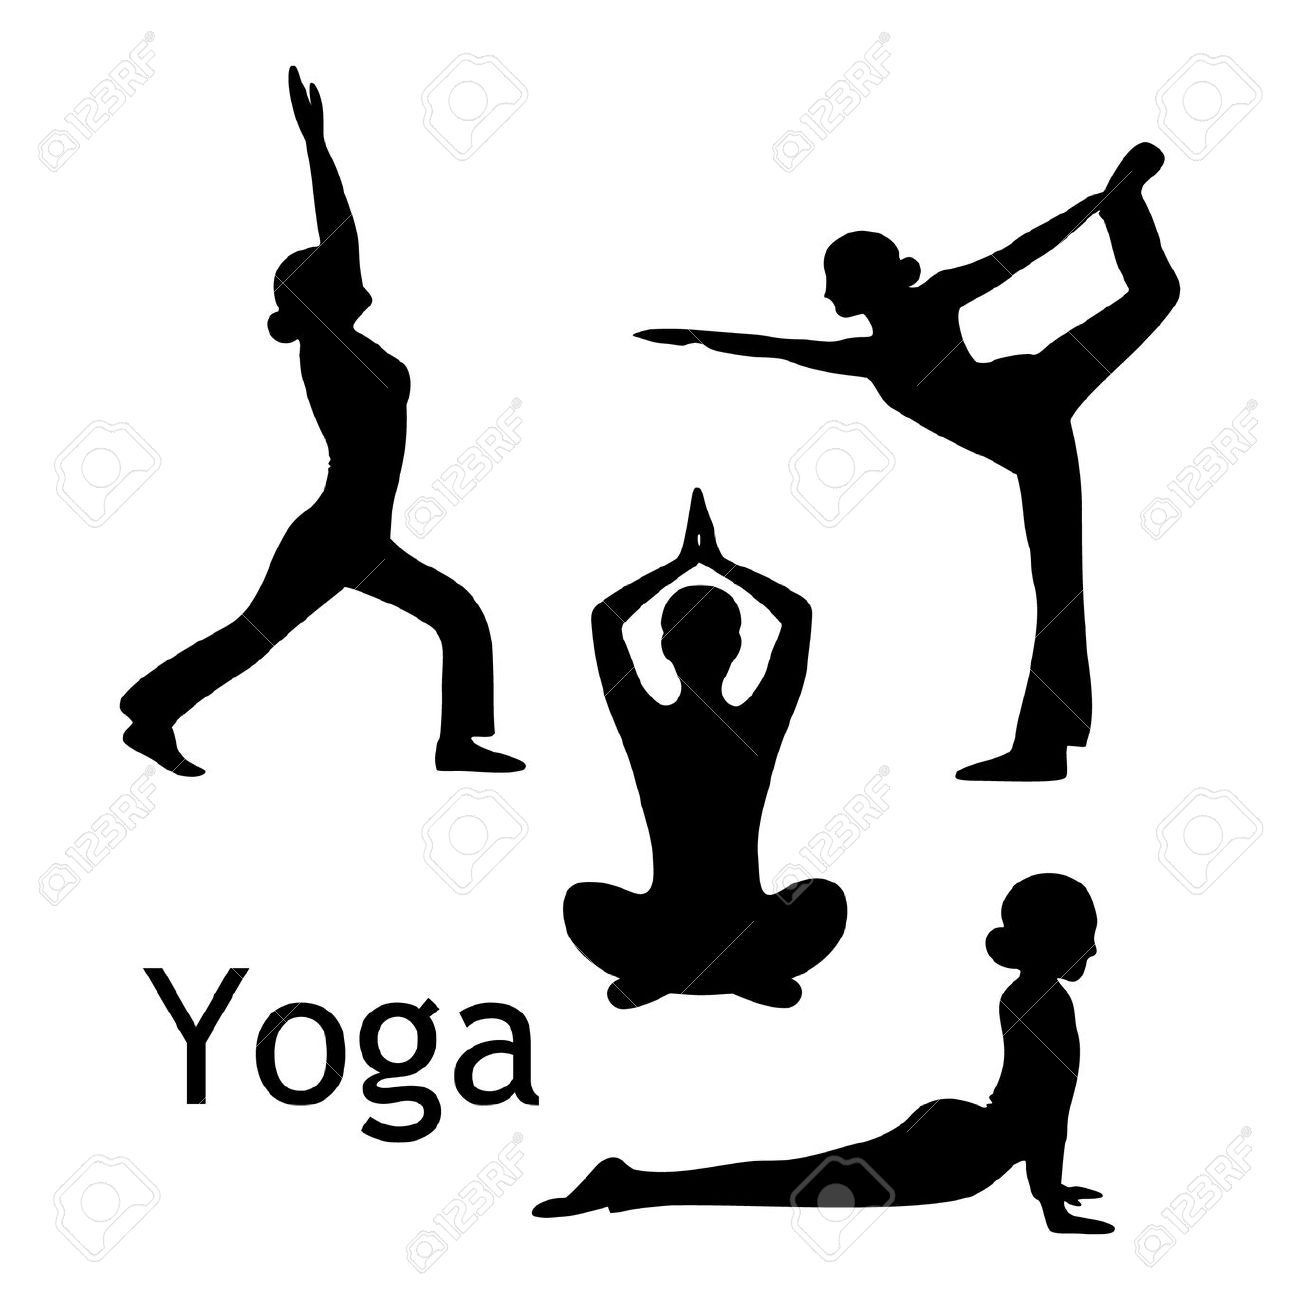 Yoga images clip art - .